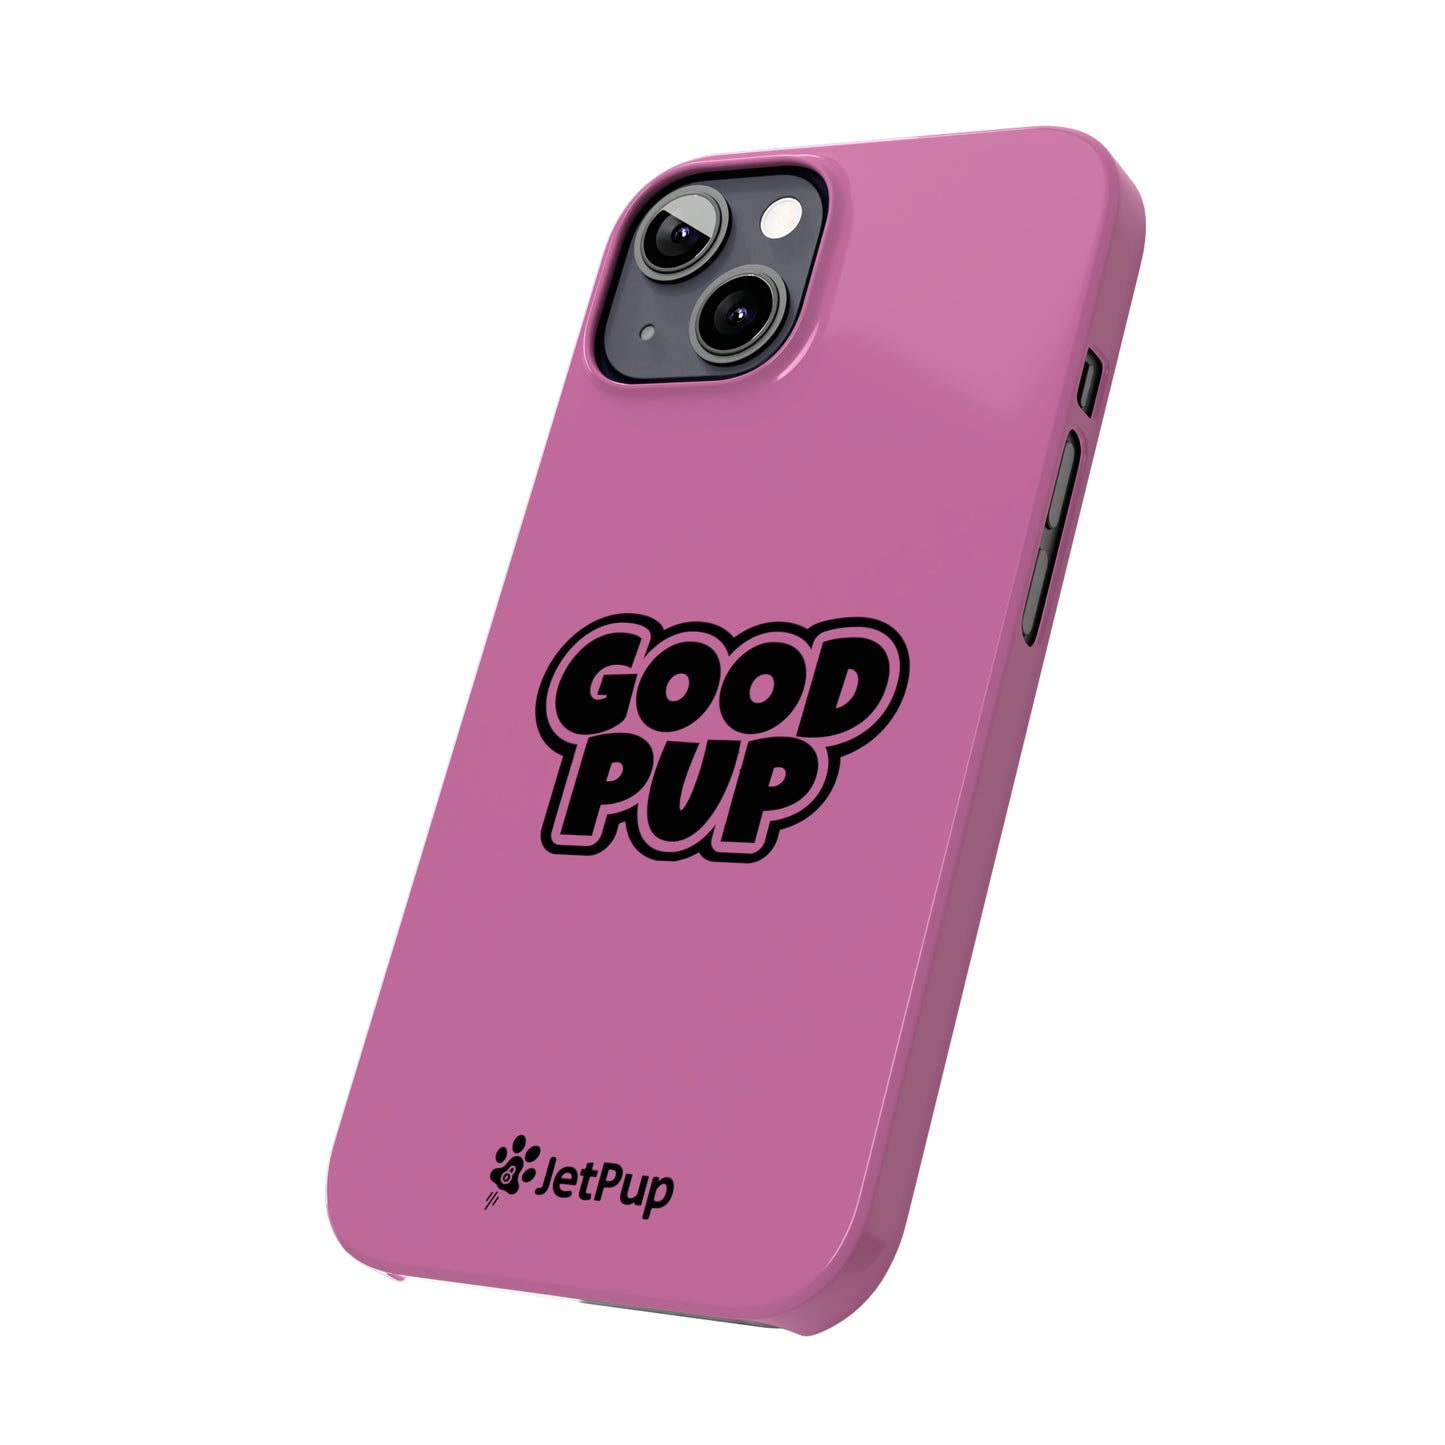 Good Pup Slim iPhone Cases - Pink